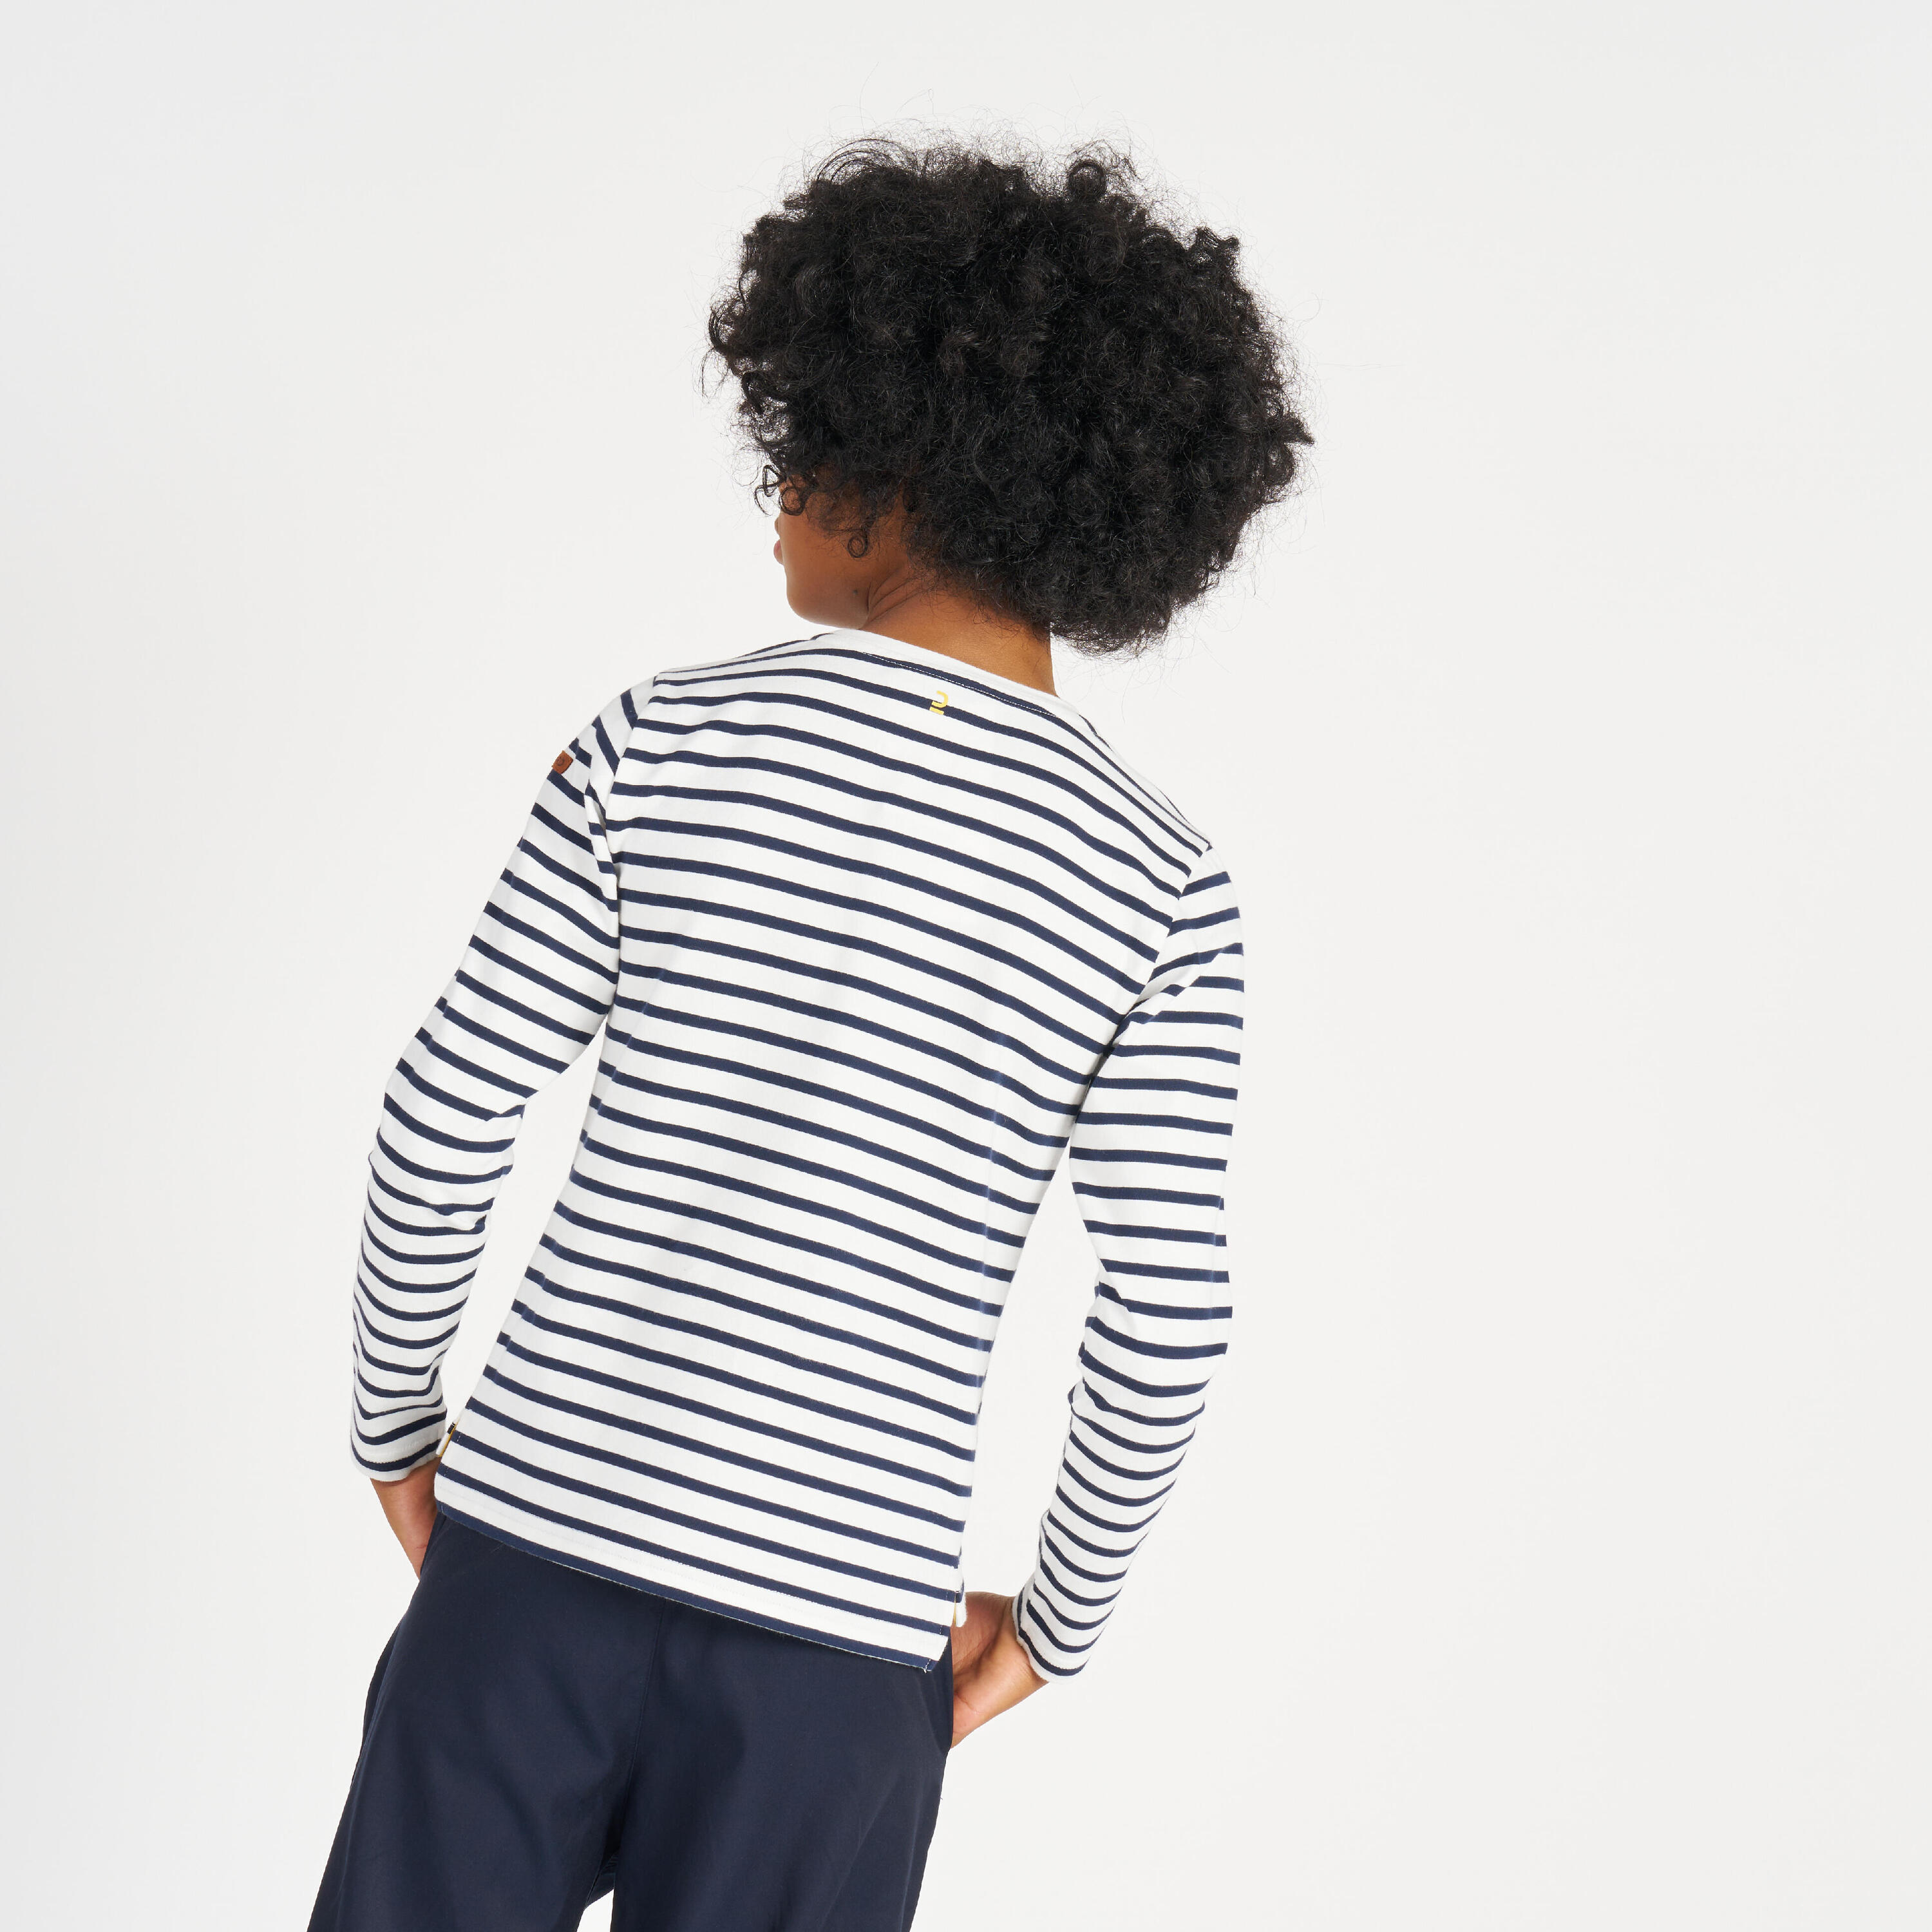 Boys' Sailing Long-sleeved T-shirt Sailing 100 blue and white stripes 4/14